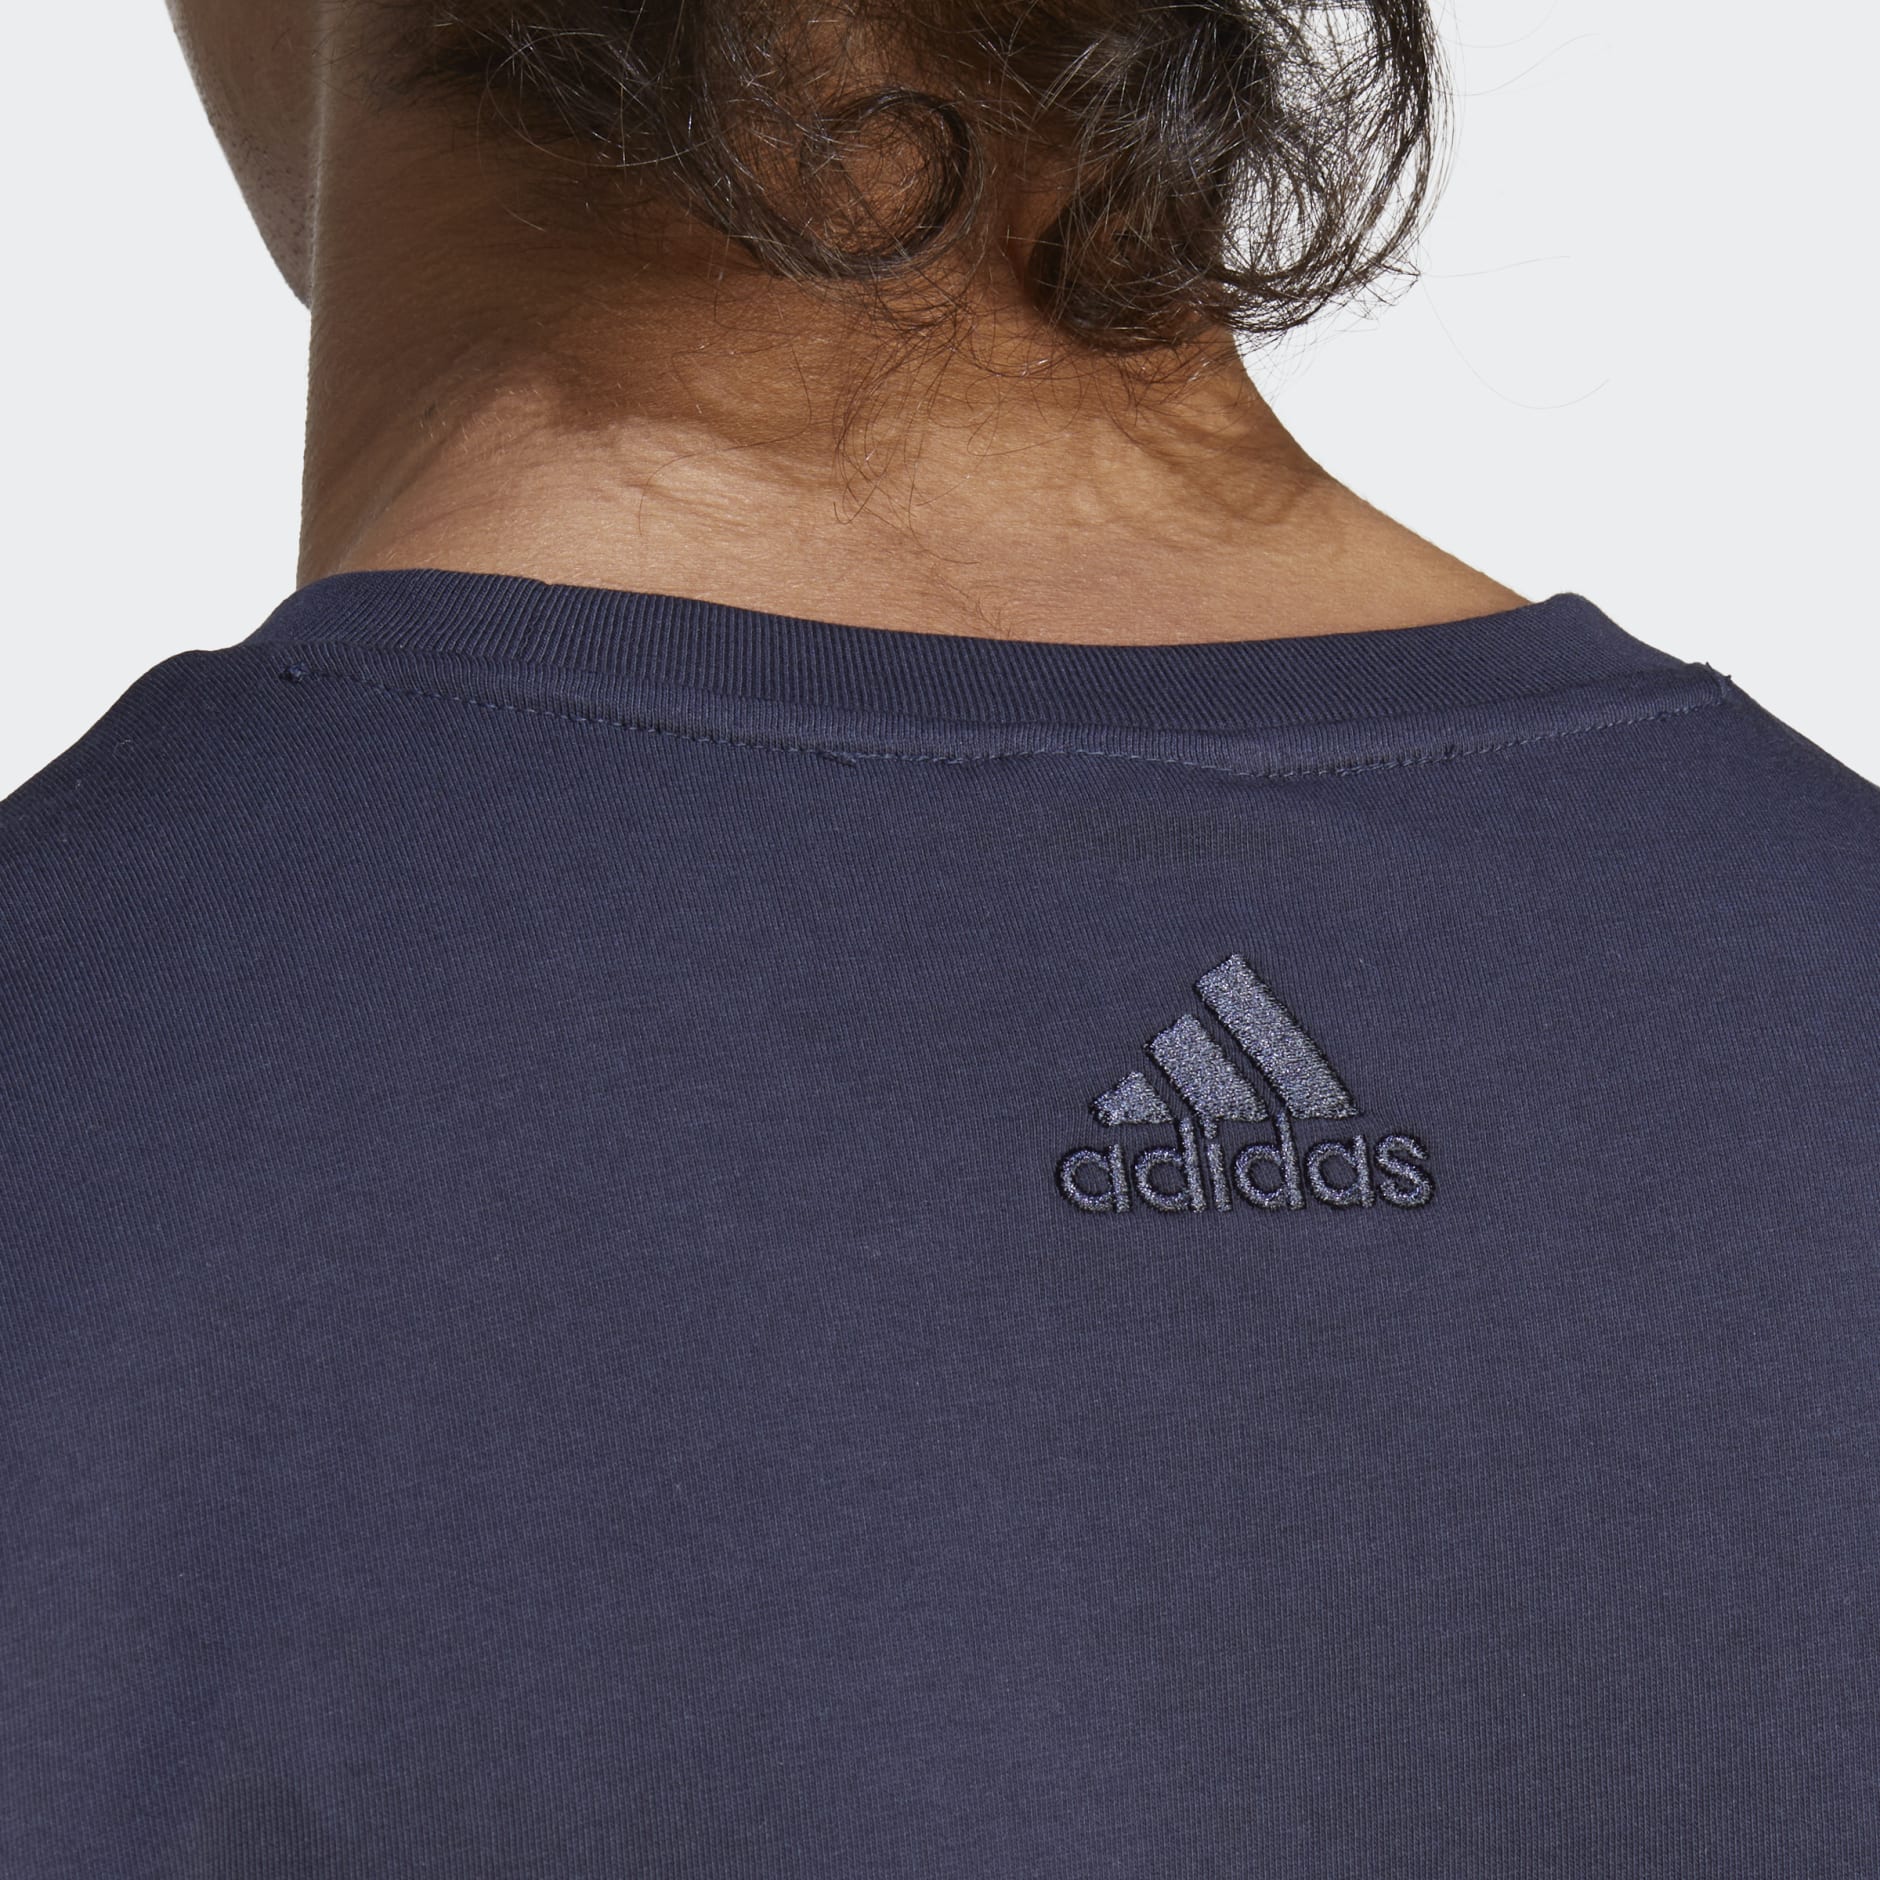 Adidas Men's Essentials Big Logo T-Shirt - Black, Size: XL, Cotton